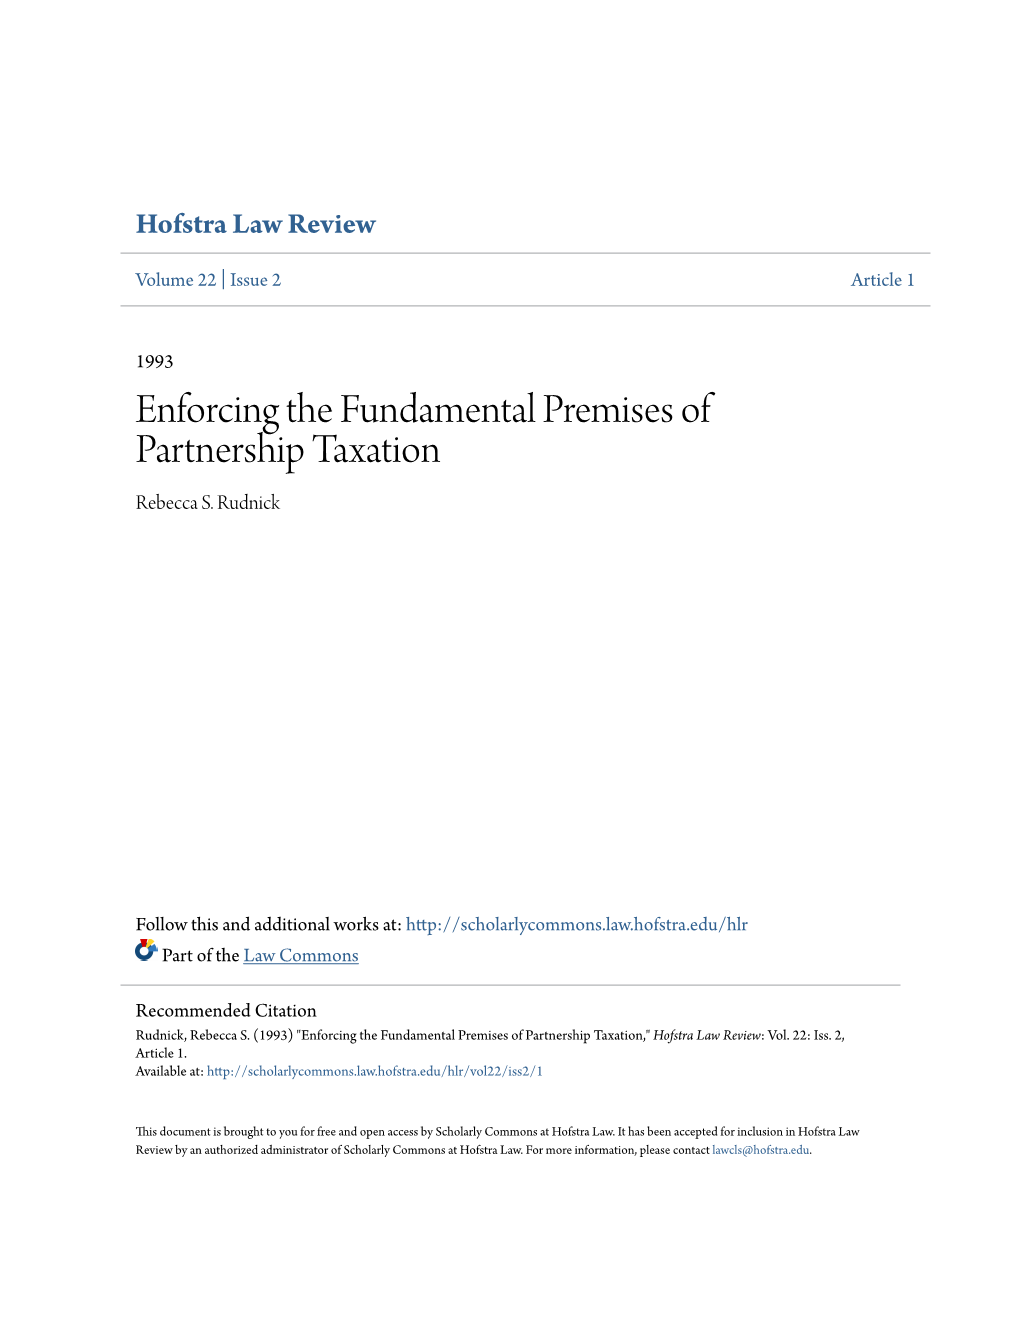 Enforcing the Fundamental Premises of Partnership Taxation Rebecca S